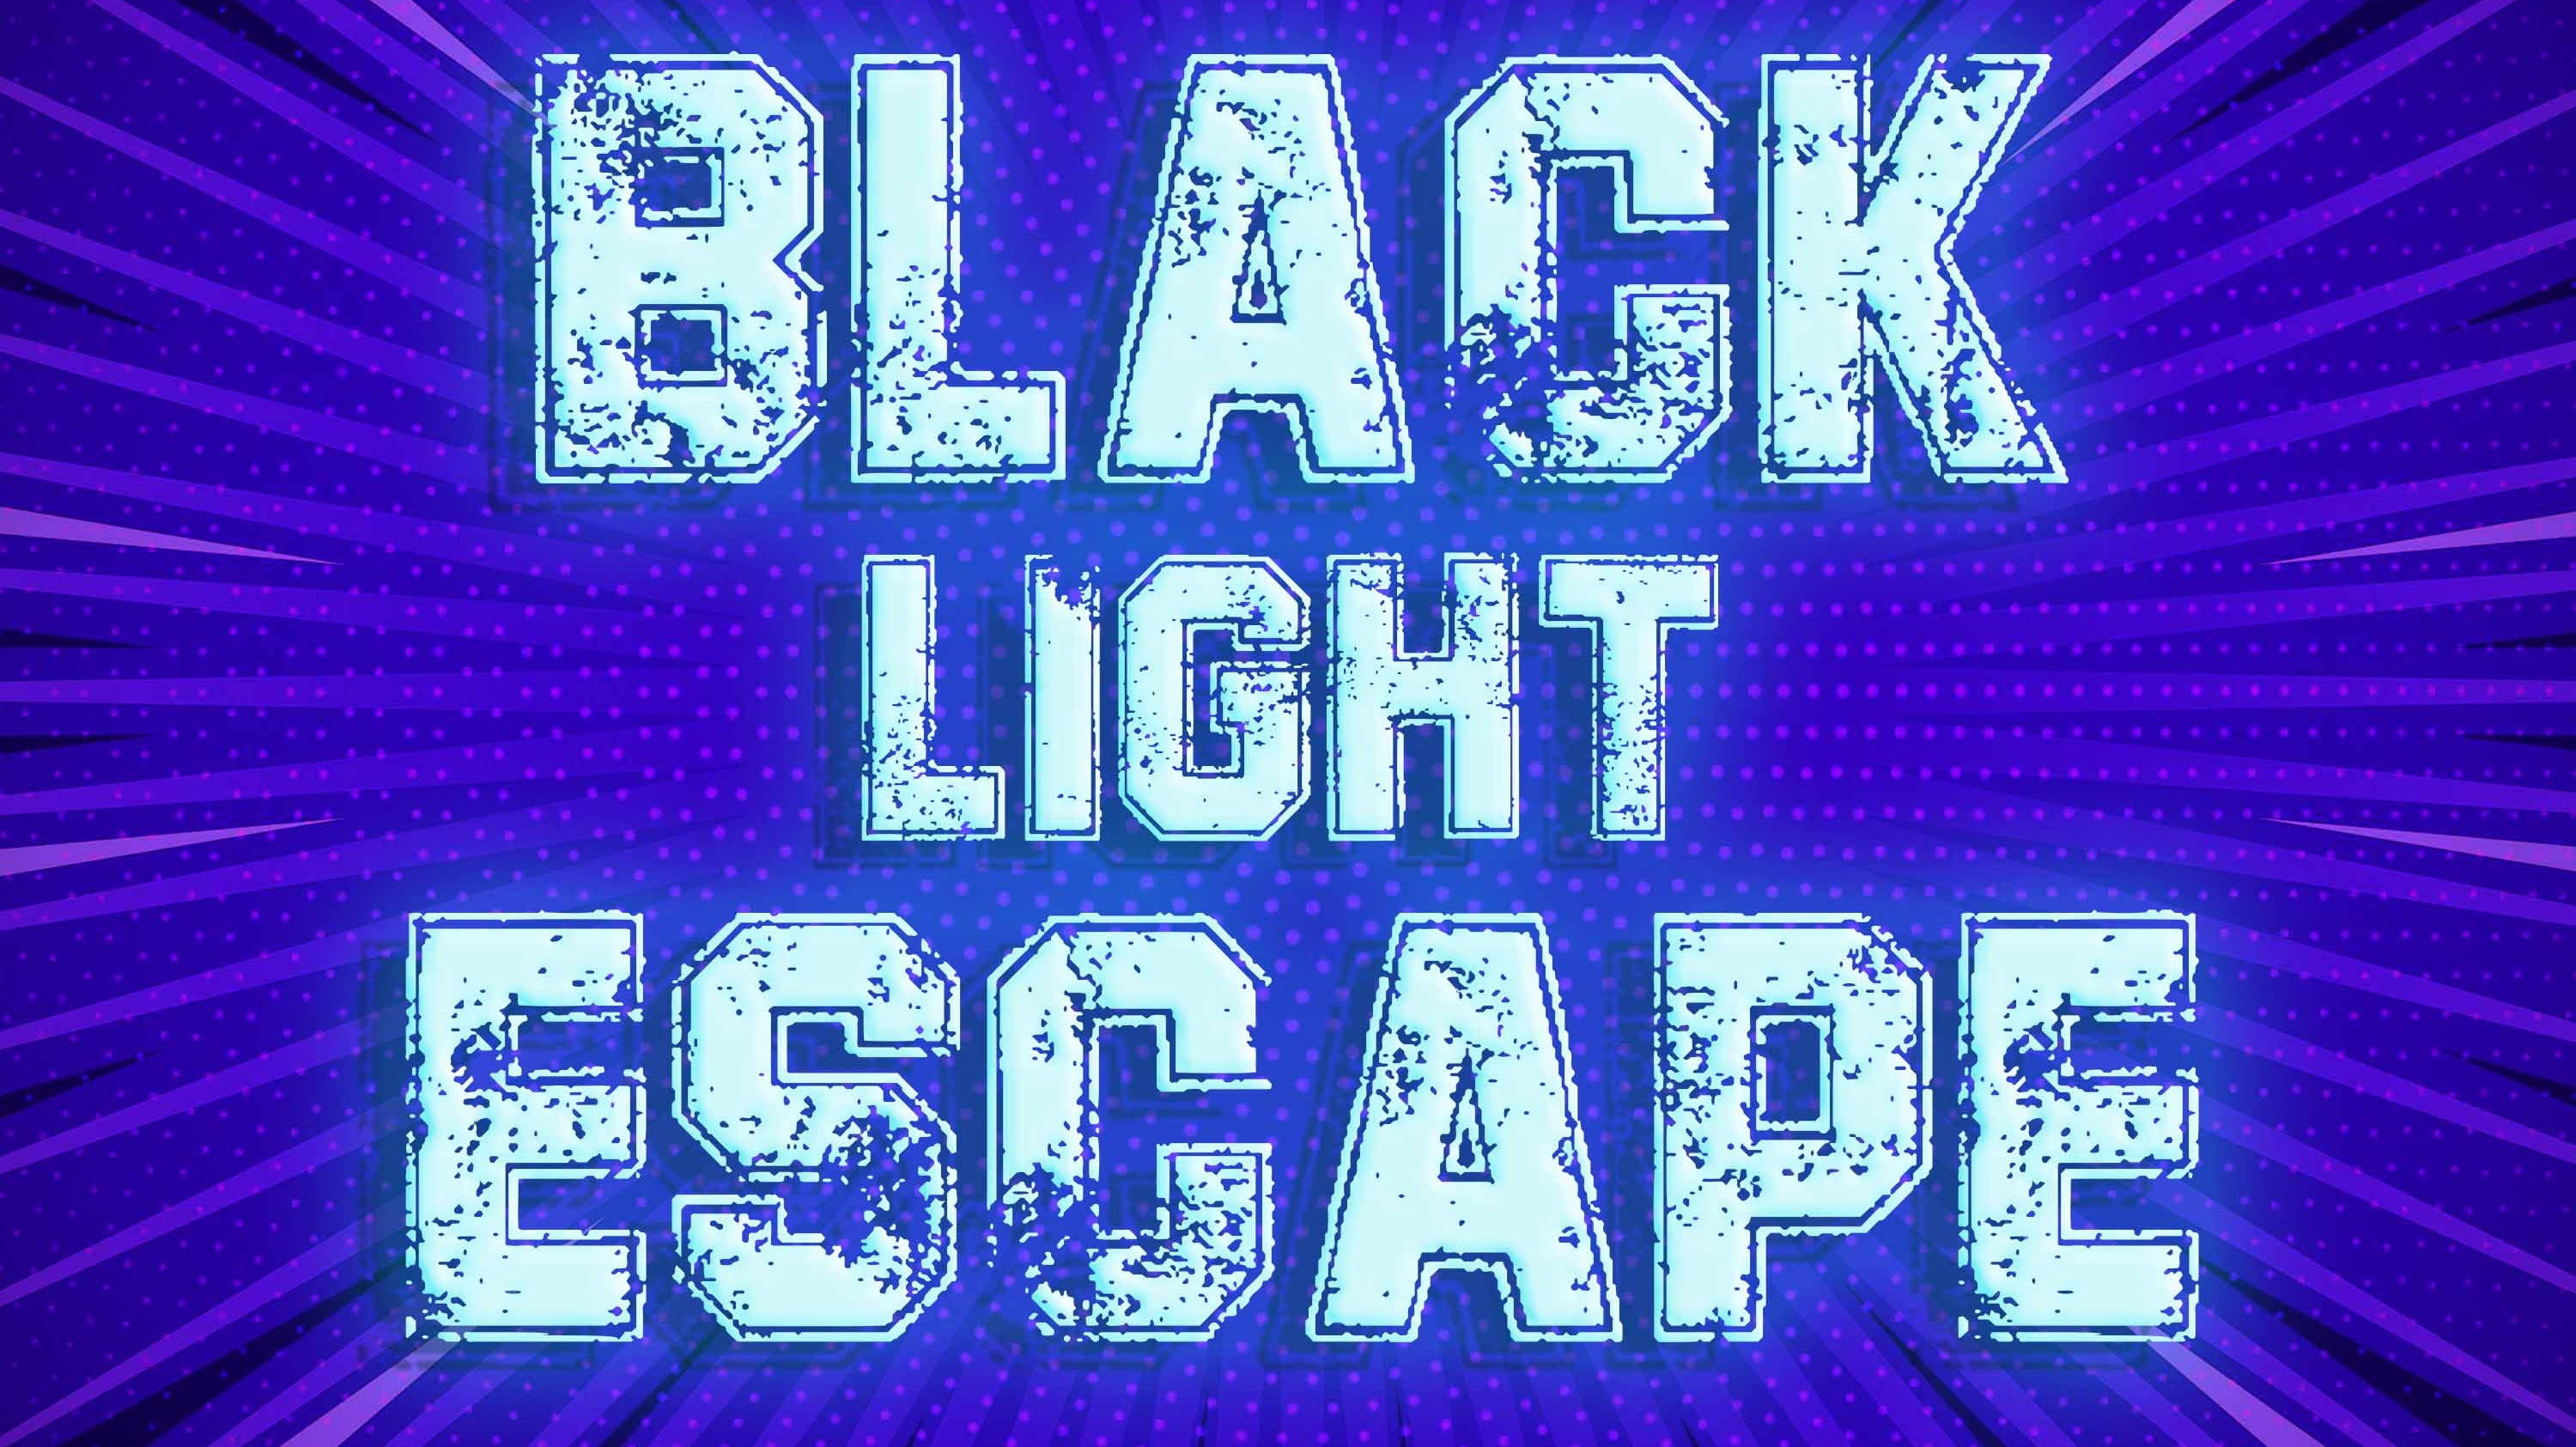 Black Light Escape Game Image